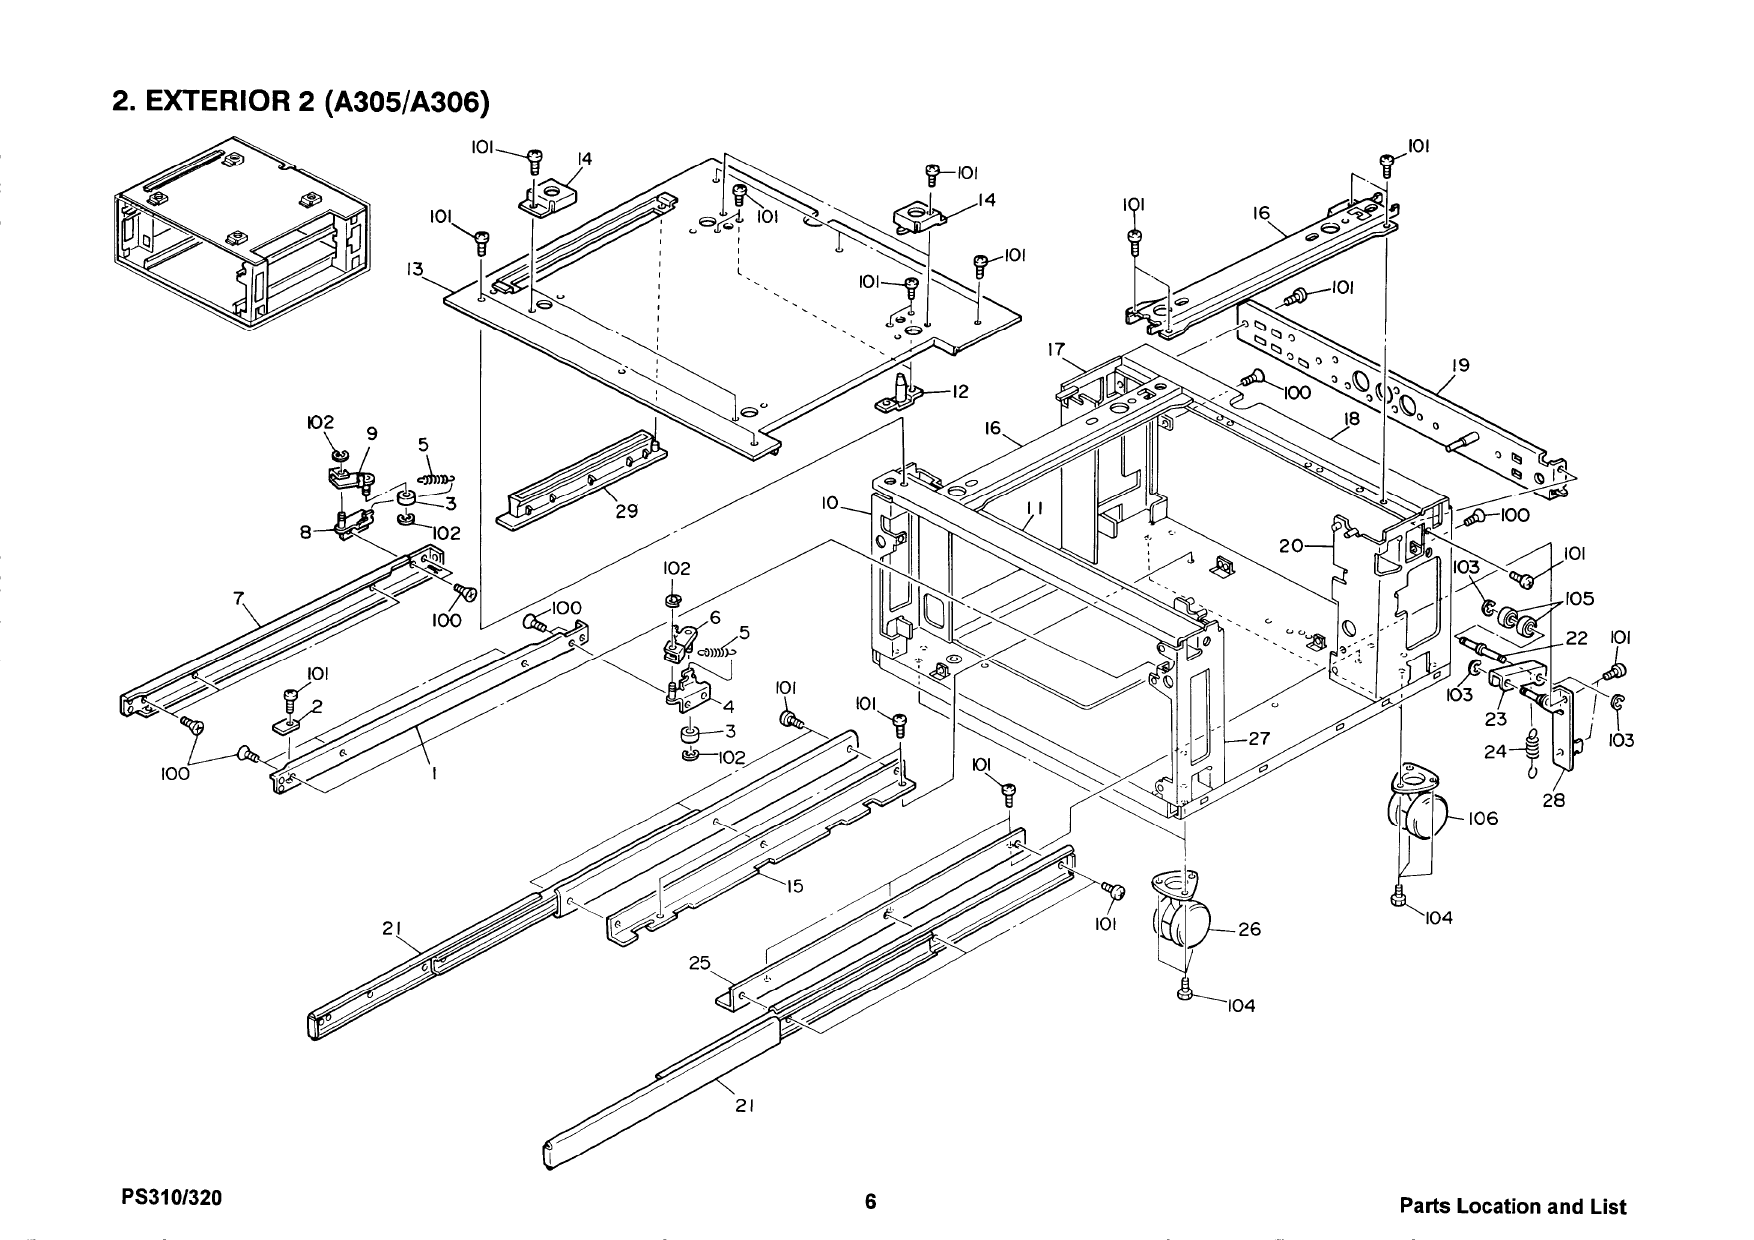 RICOH Options A305 A306 Parts Catalog PDF download-2